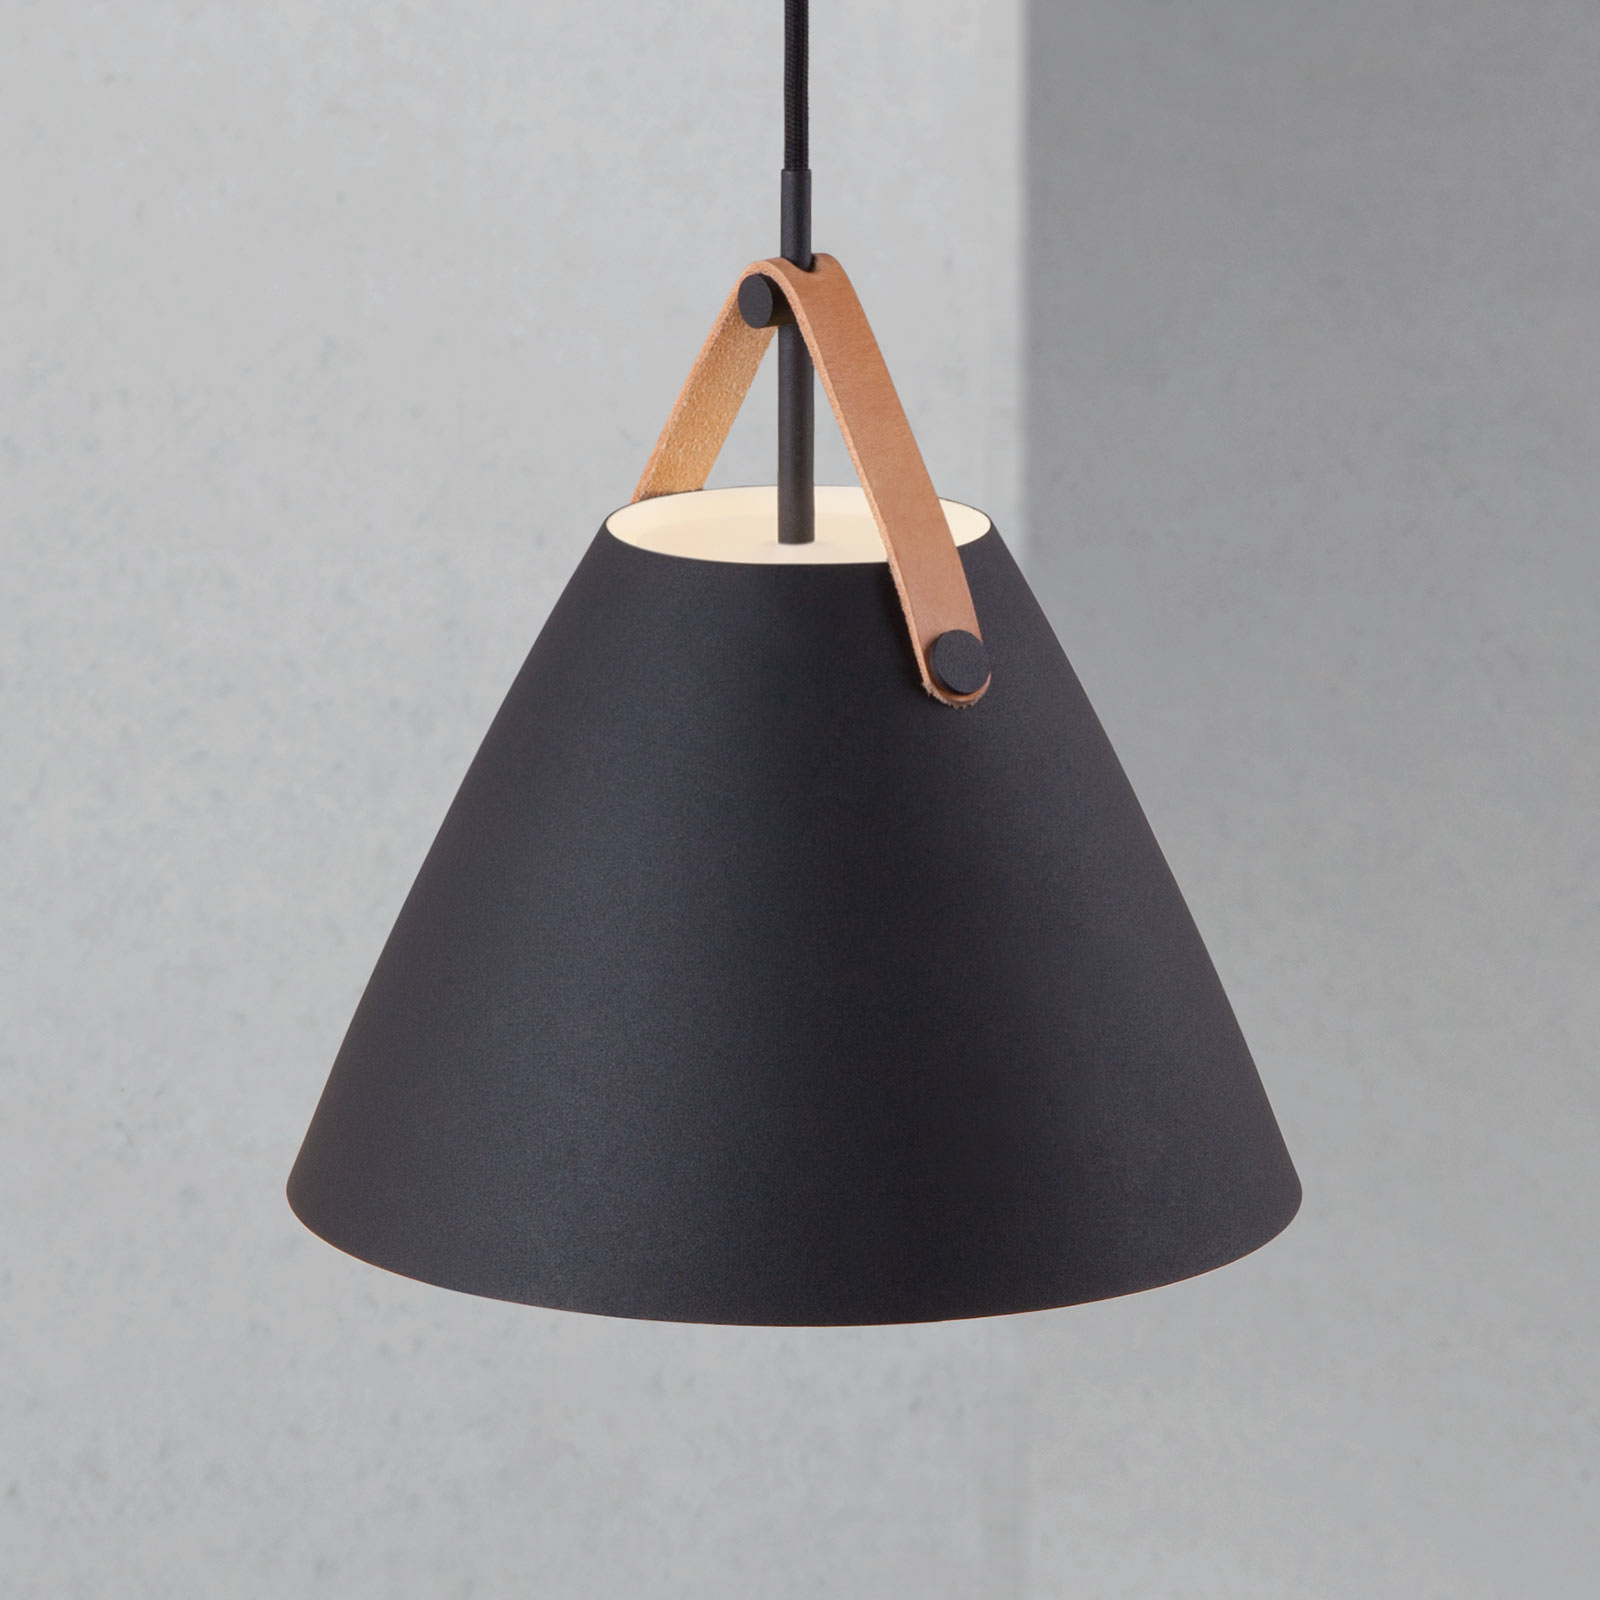 Hanglamp Strap in zwart, Ø 27 cm